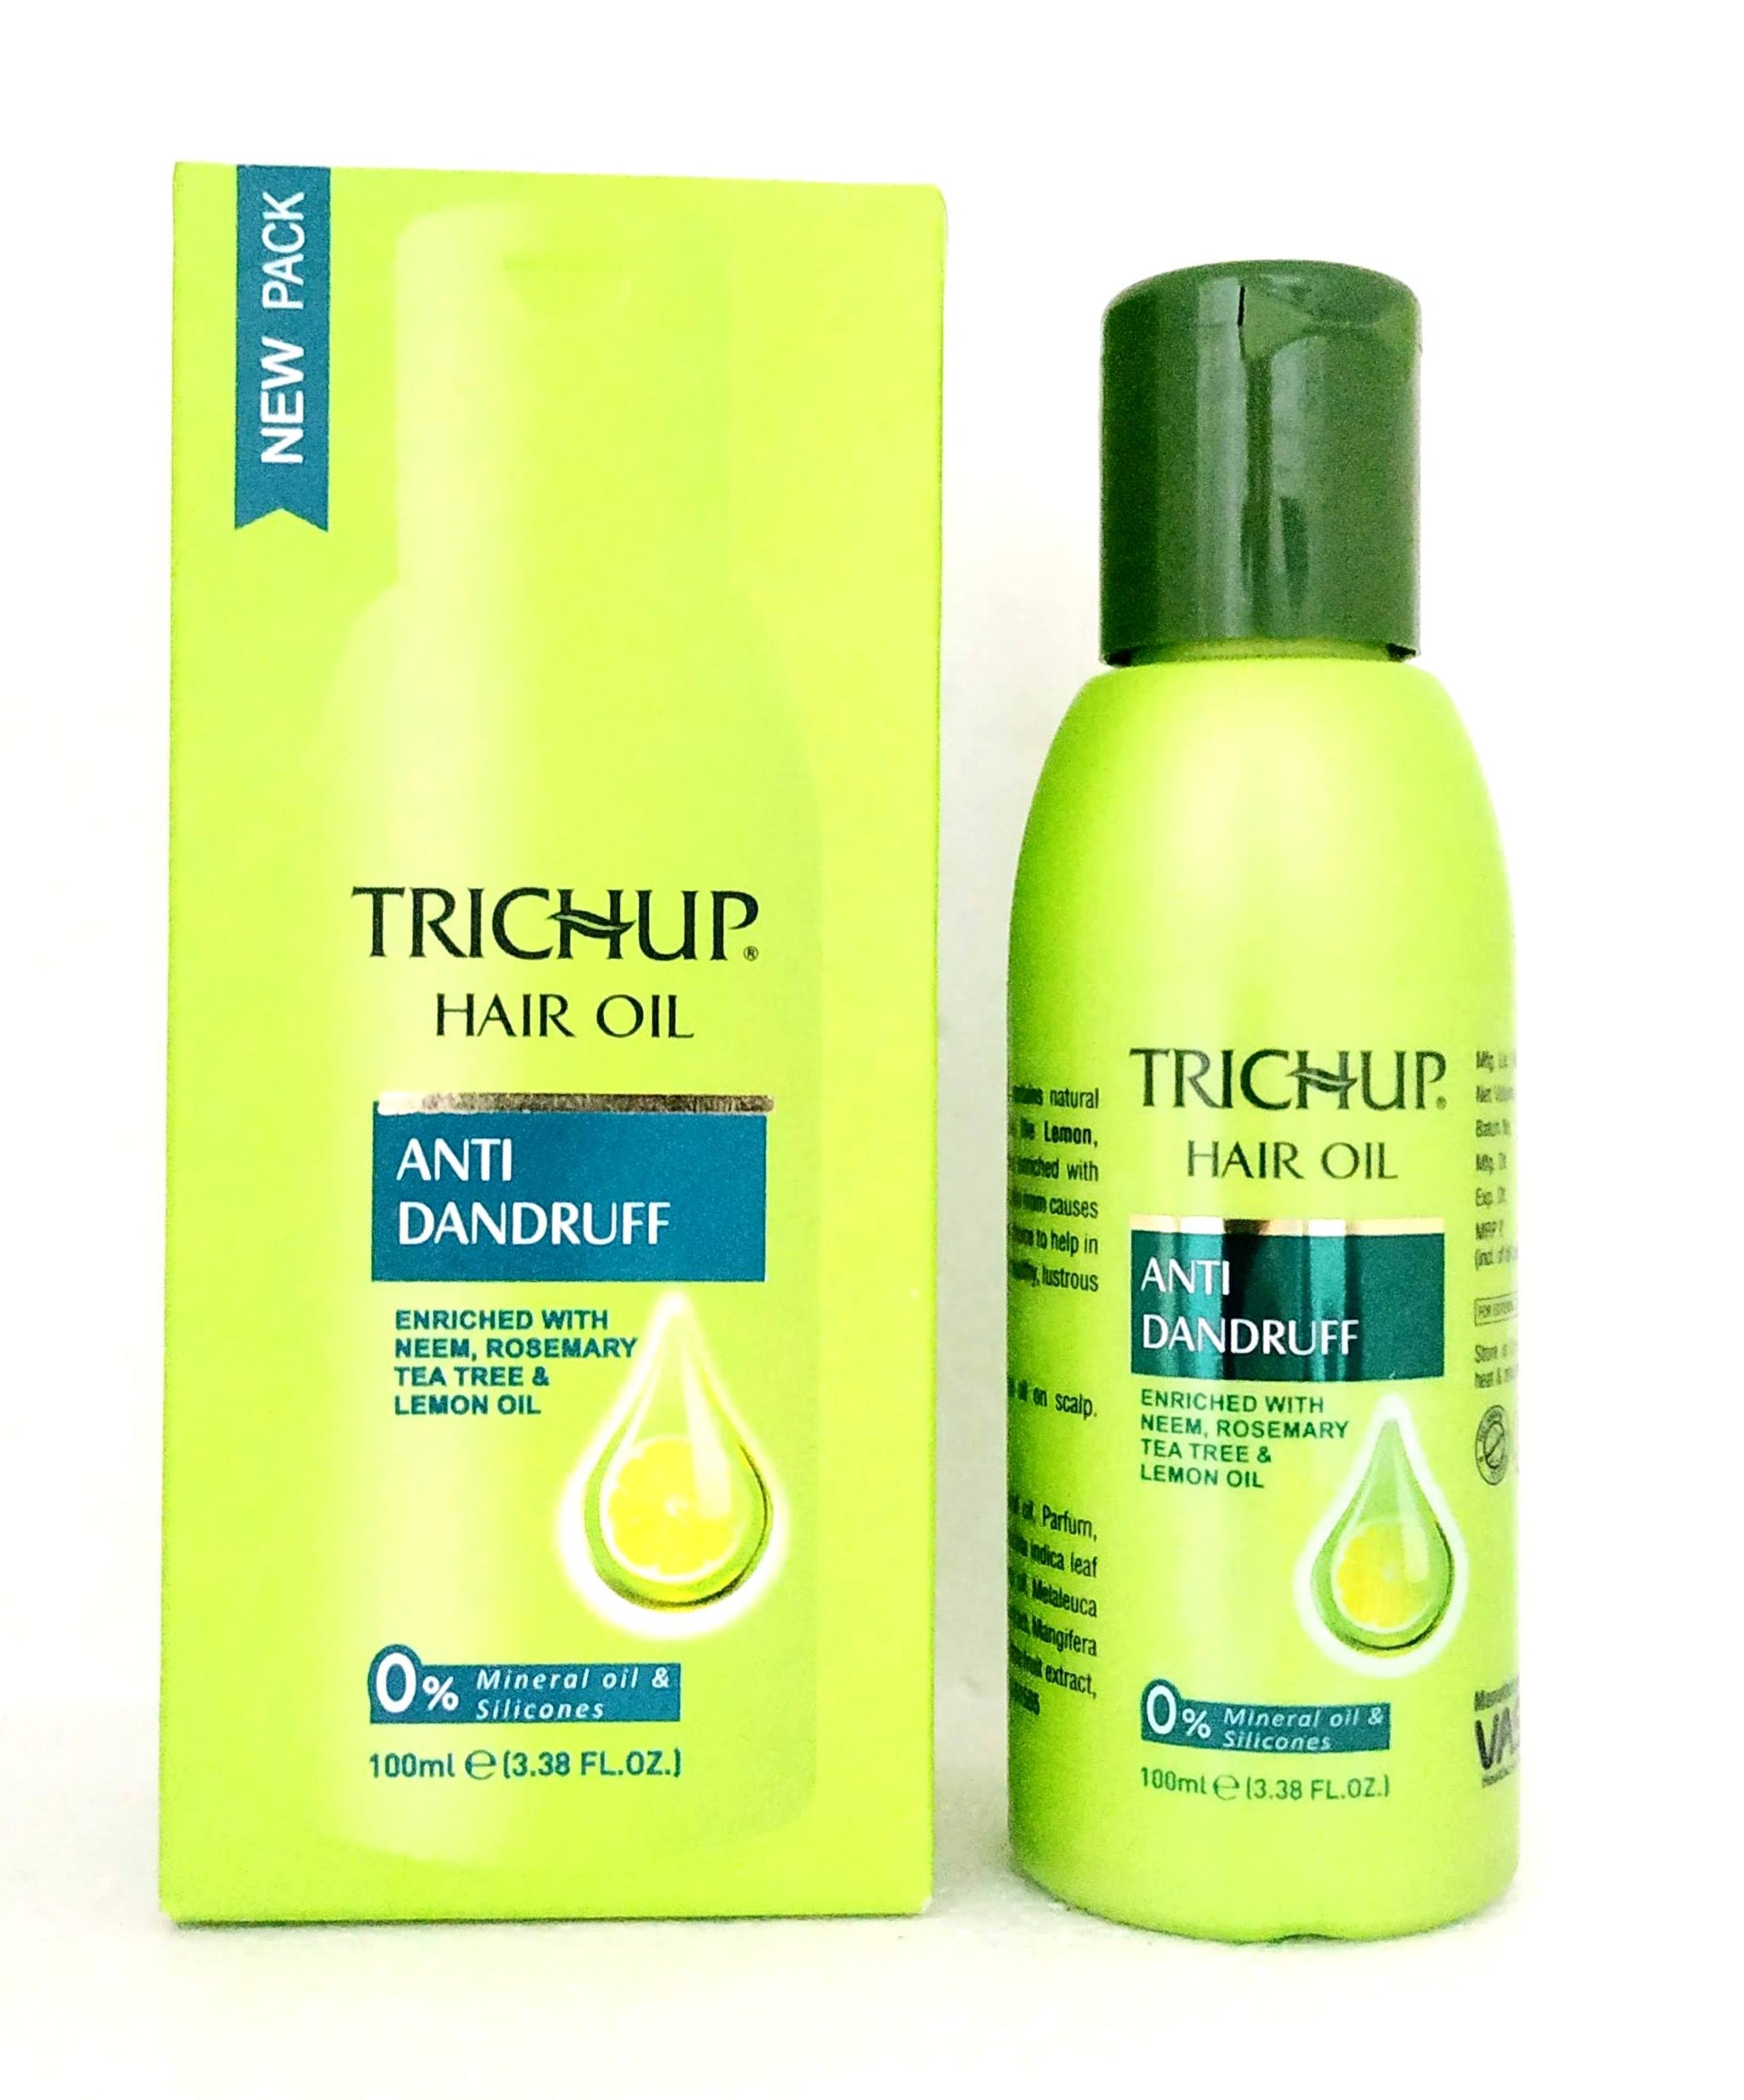 Shop Trichup anti dandruff hair oil 100ml at price 160.00 from Vasu herbals Online - Ayush Care